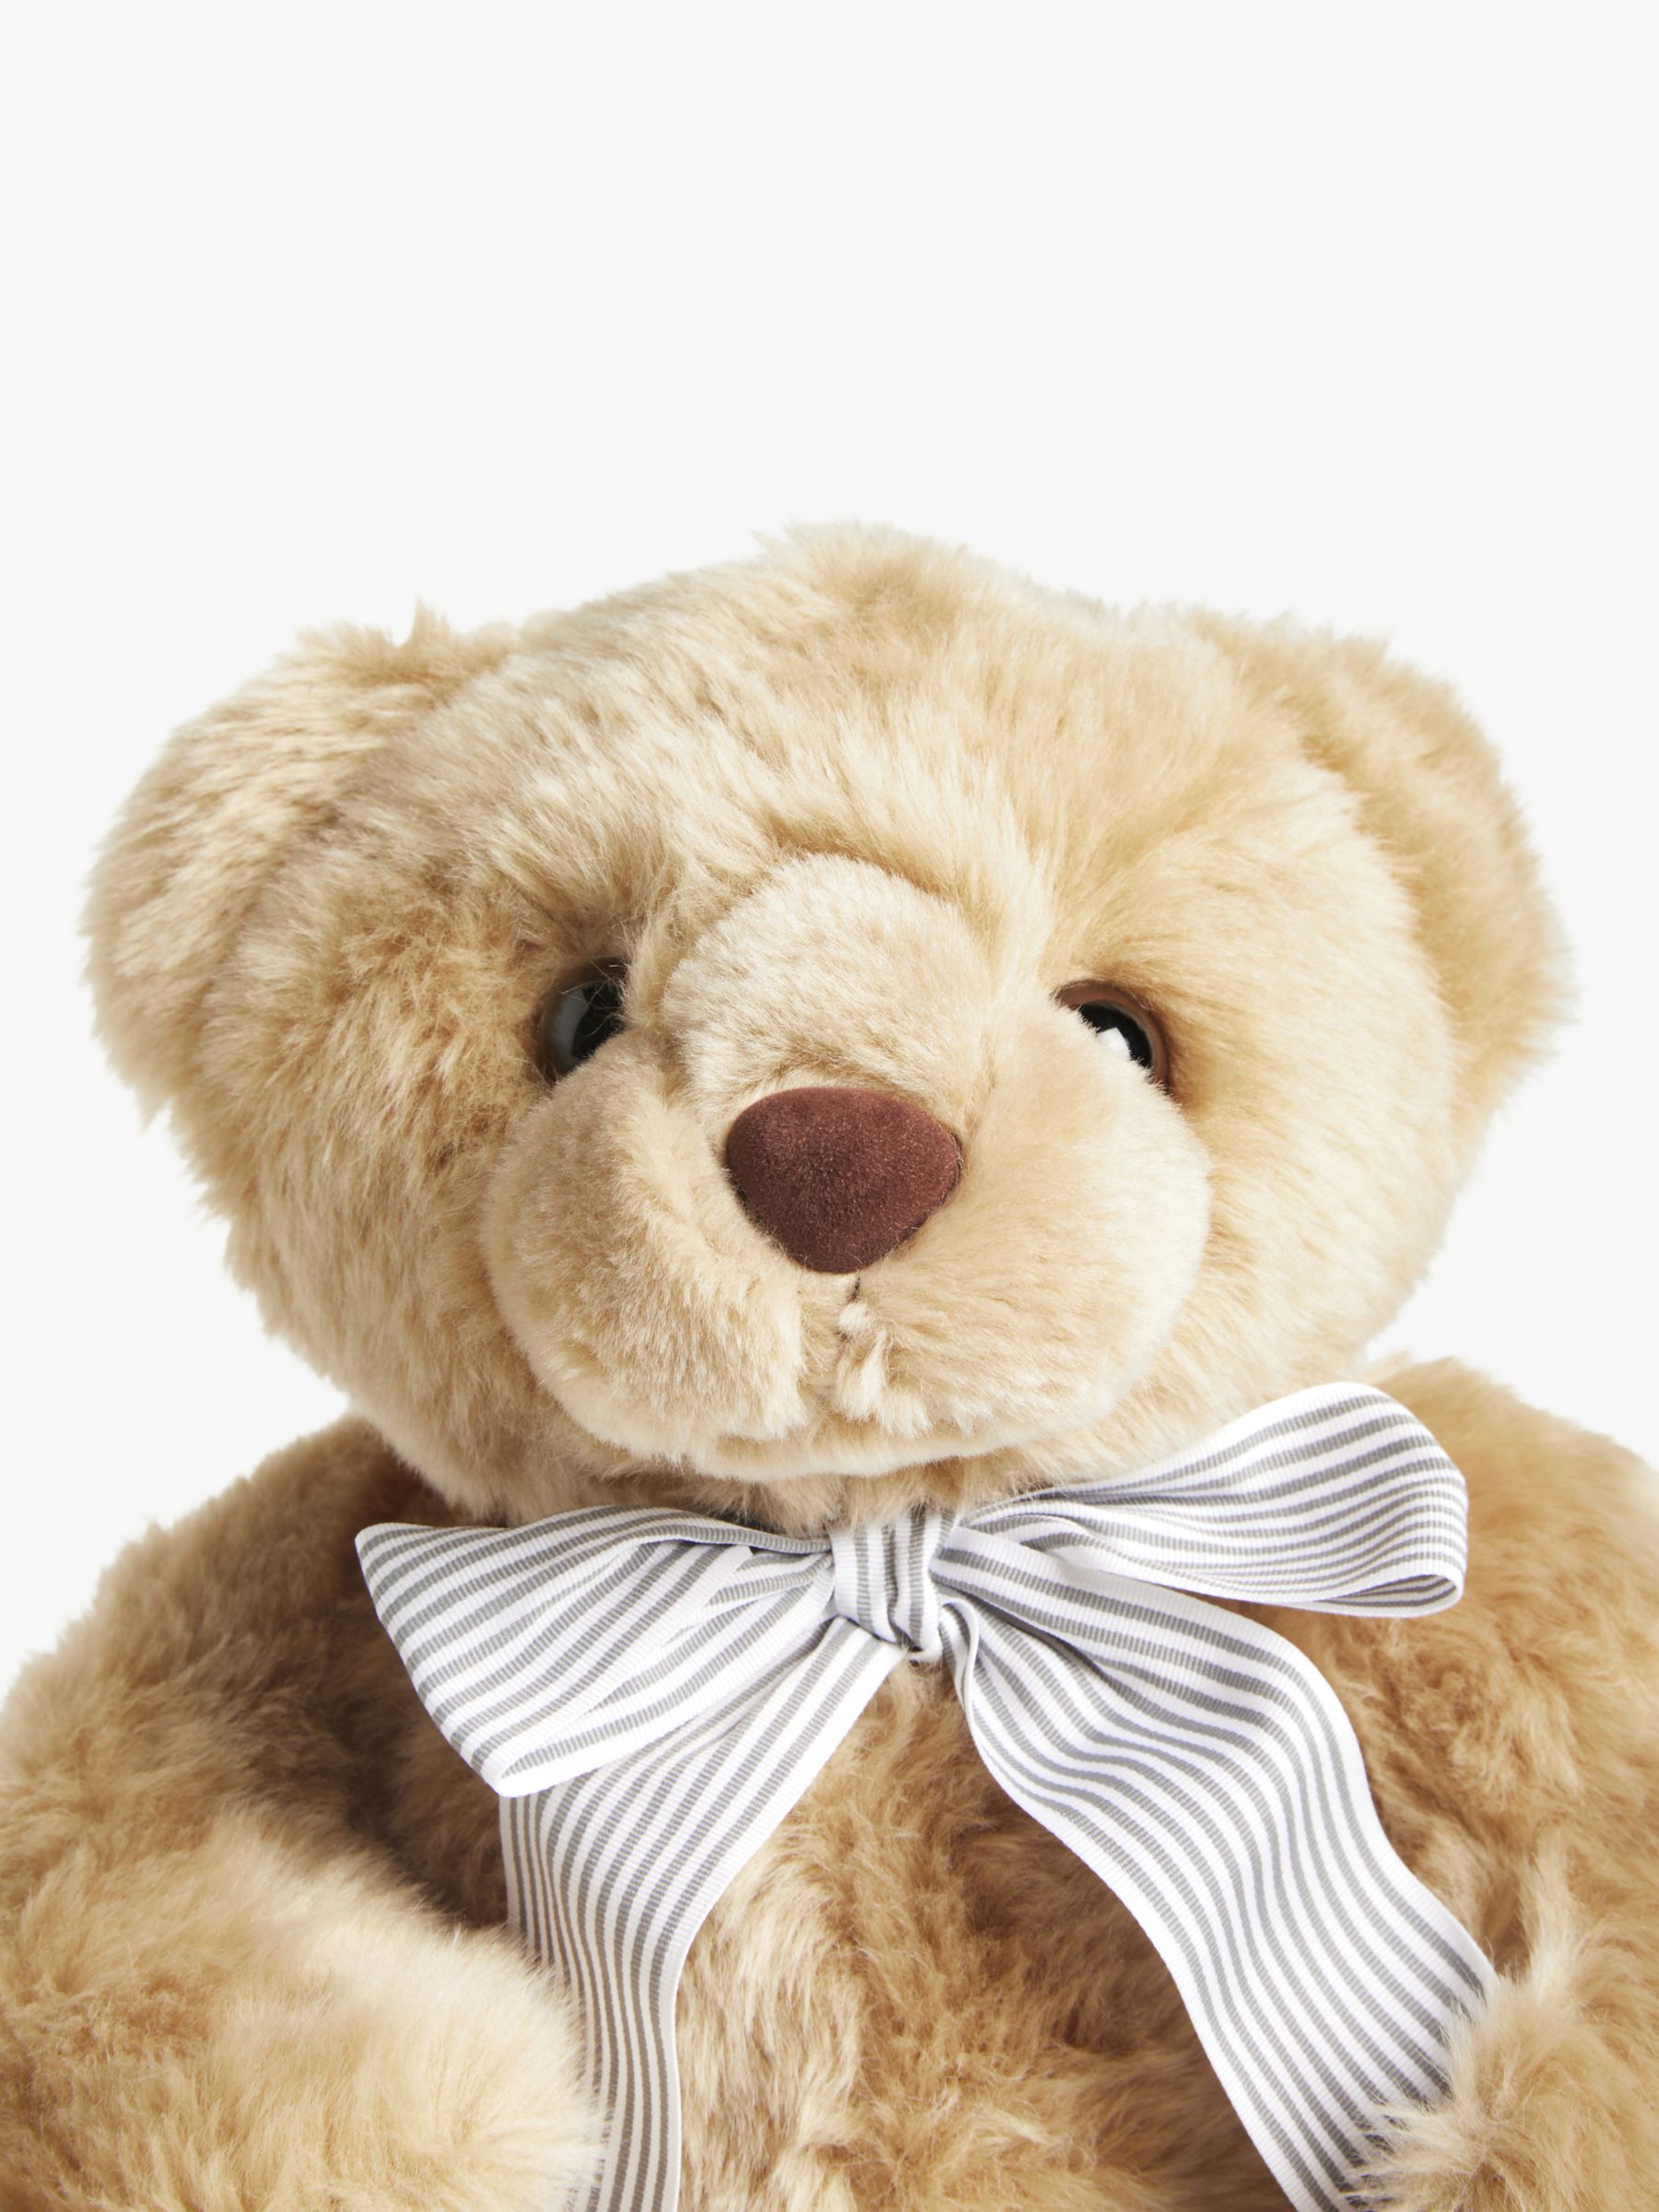 wearable teddy bear